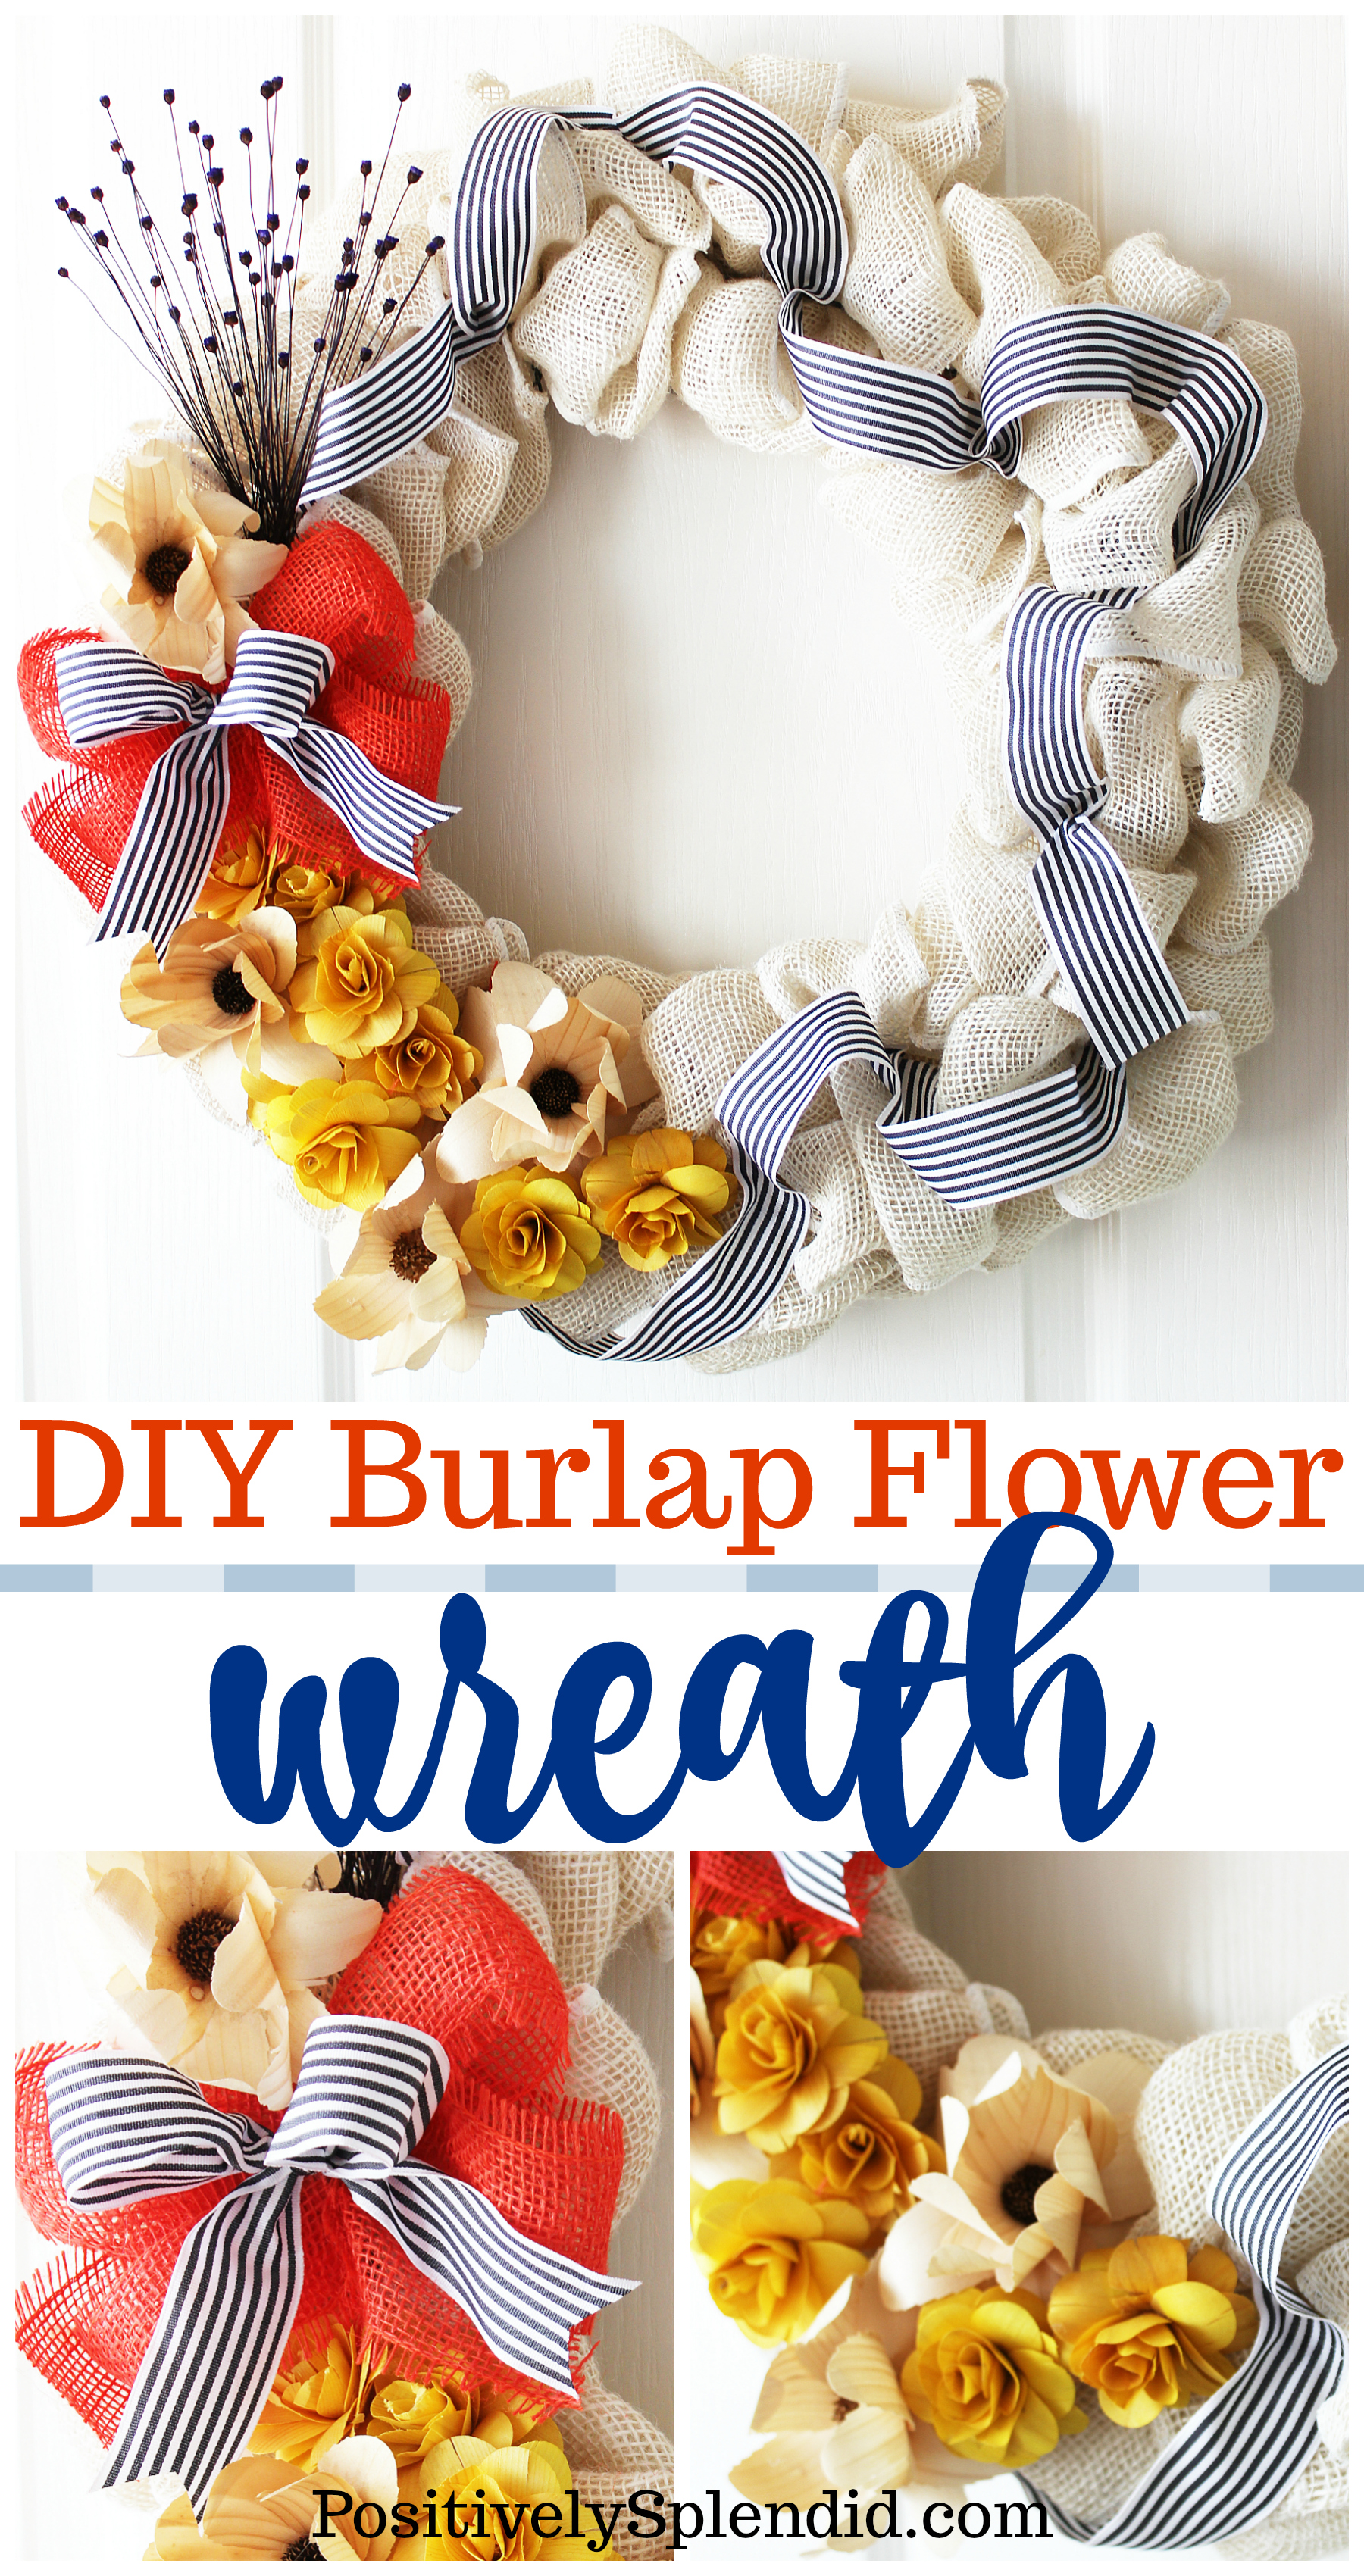 How to Make a DIY Burlap Flower Wreath - Such a pretty idea for any season!